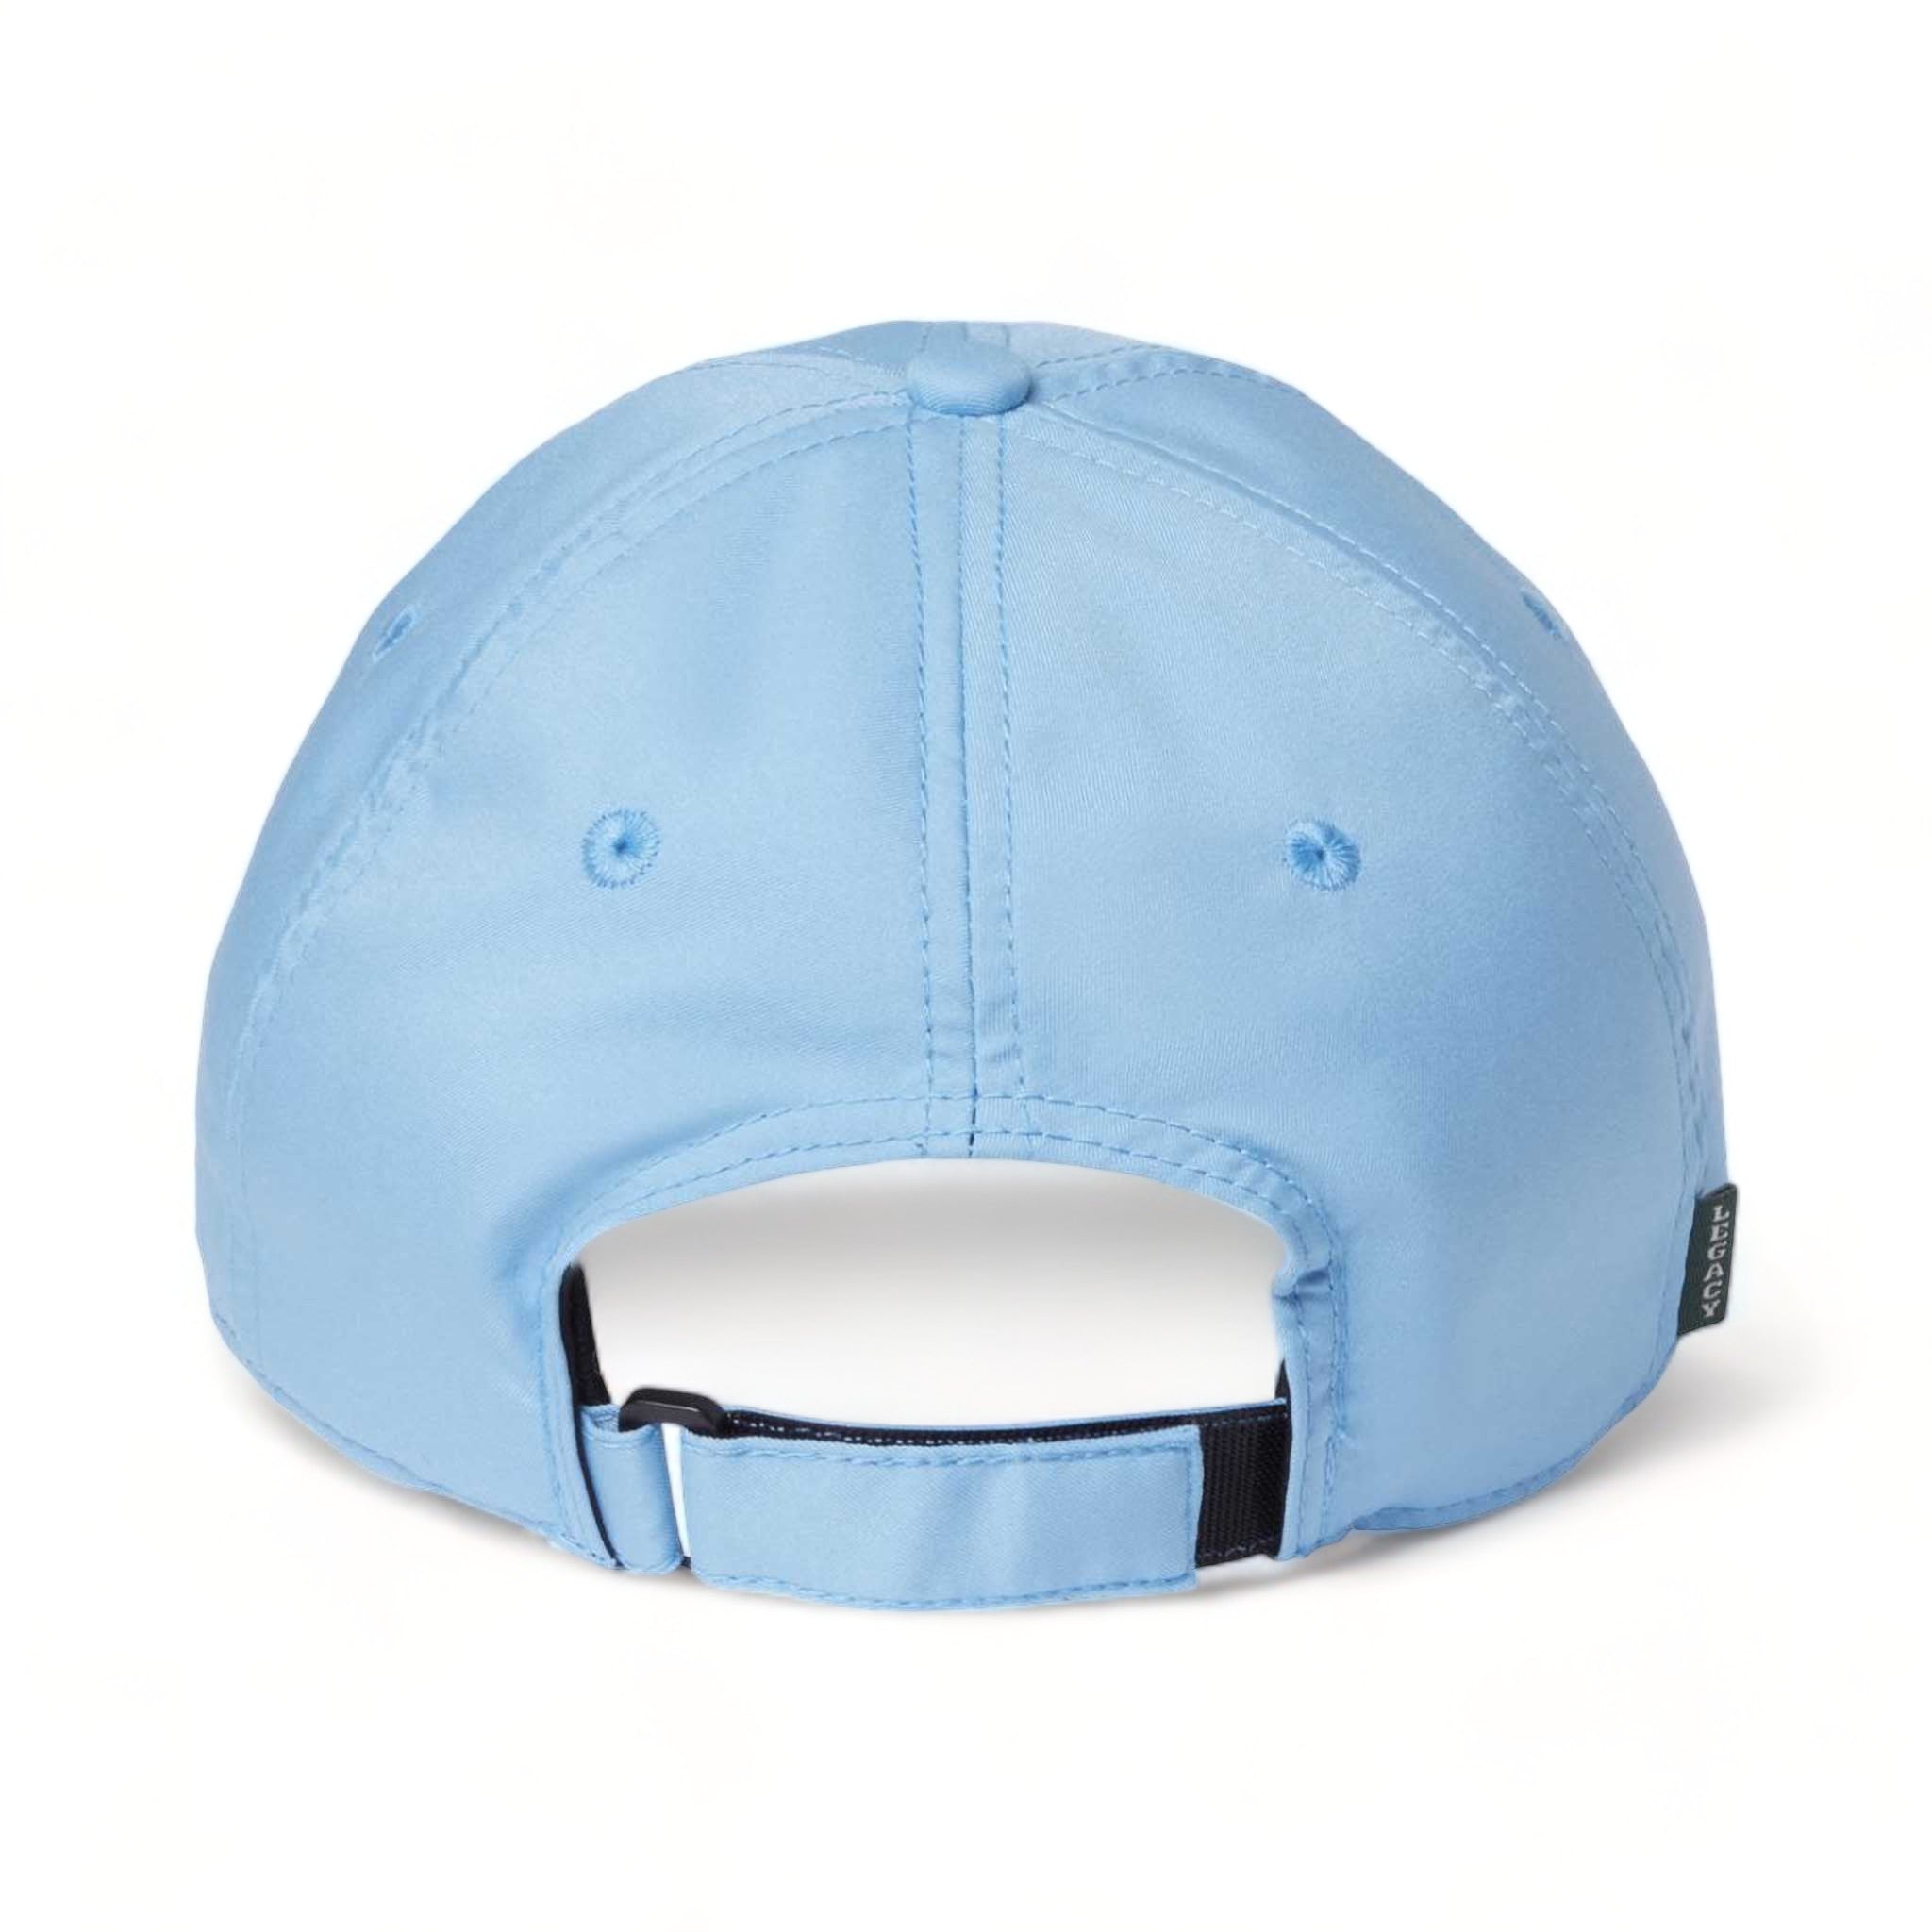 Back view of LEGACY CFA custom hat in light blue